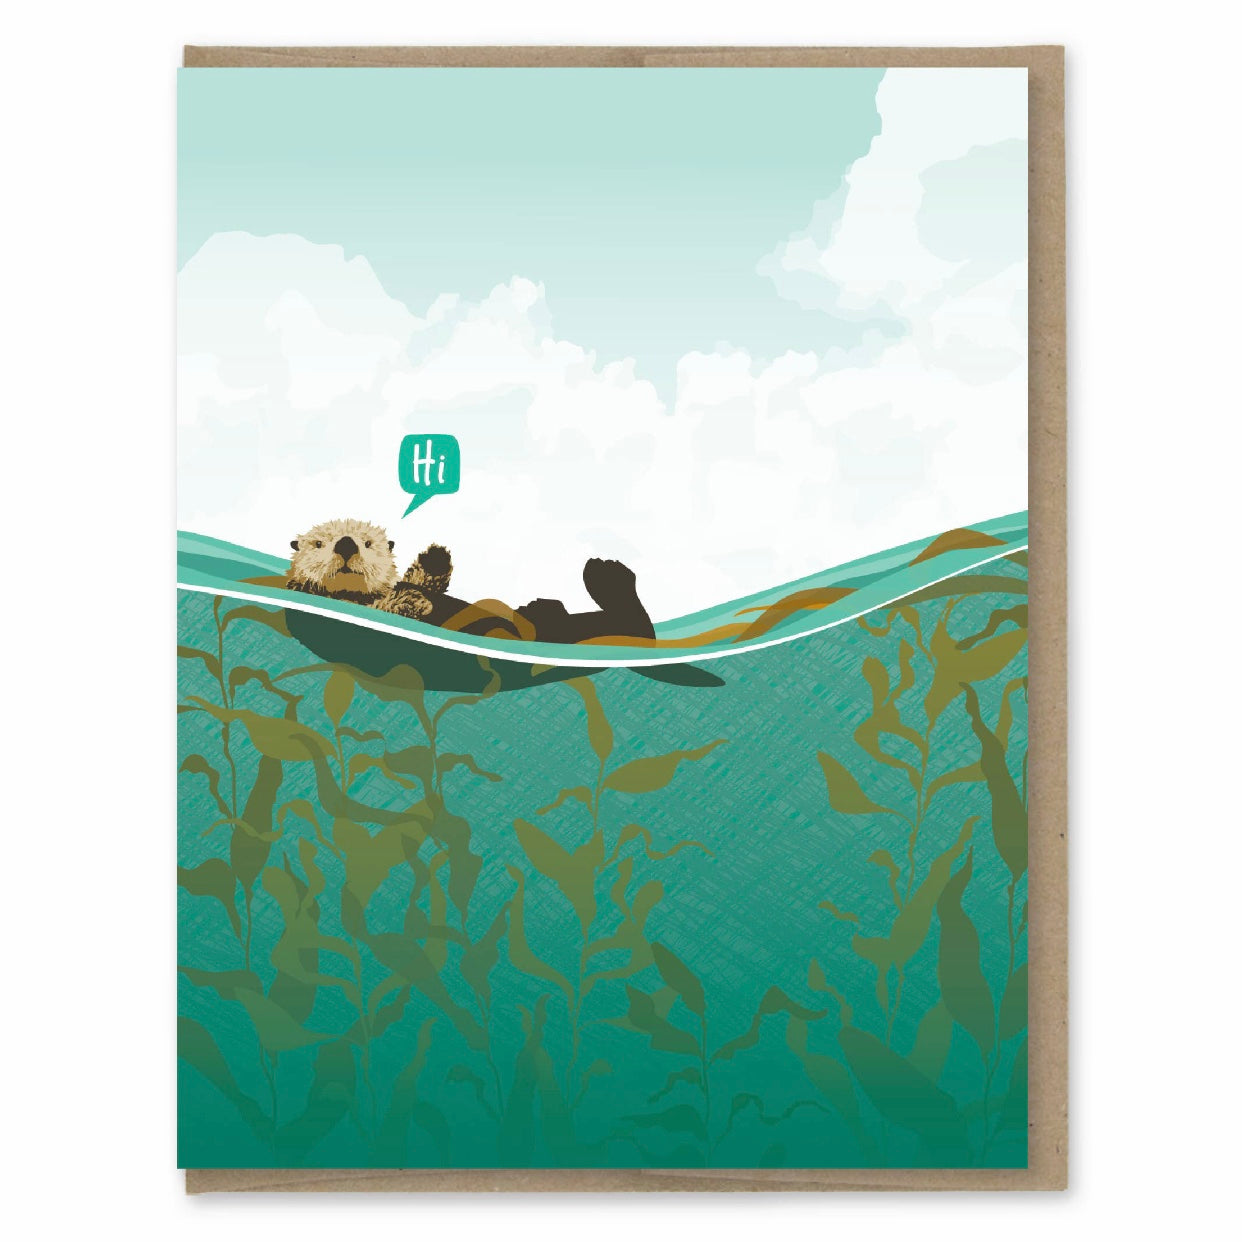 hi otter swimming greeting card